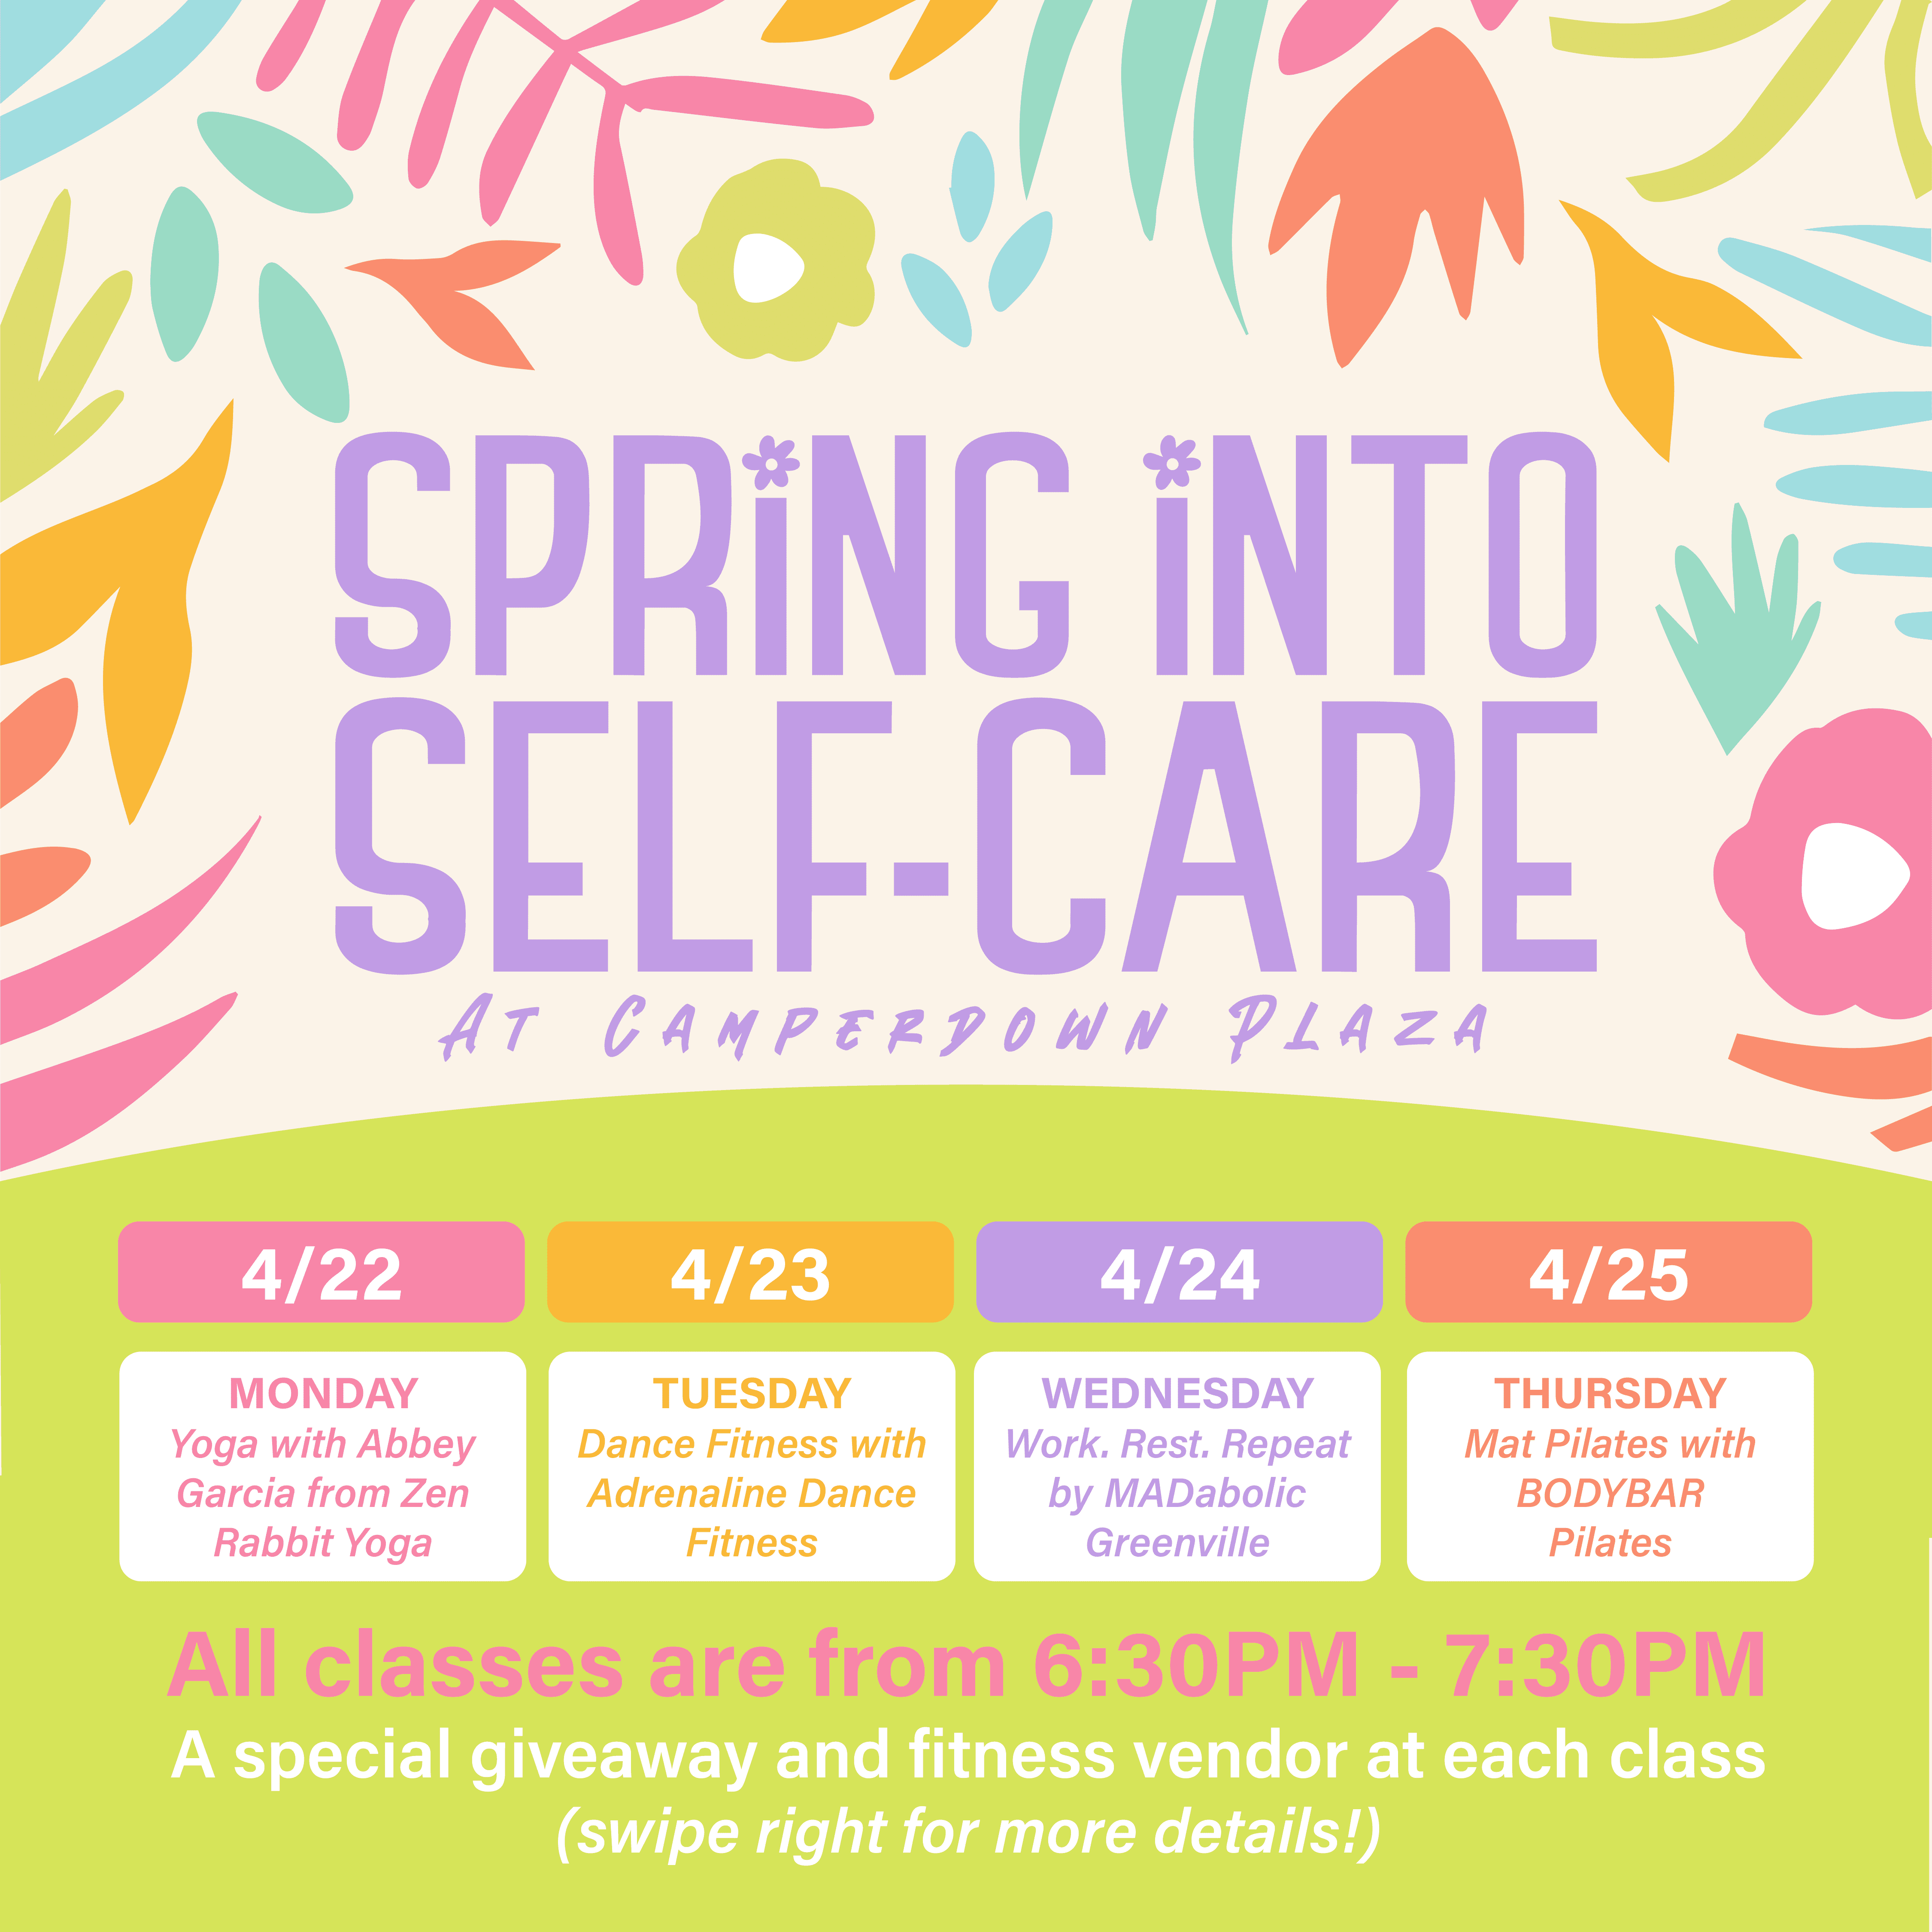 SpringIntoSelf Care 1 - Spring Into Self-Care